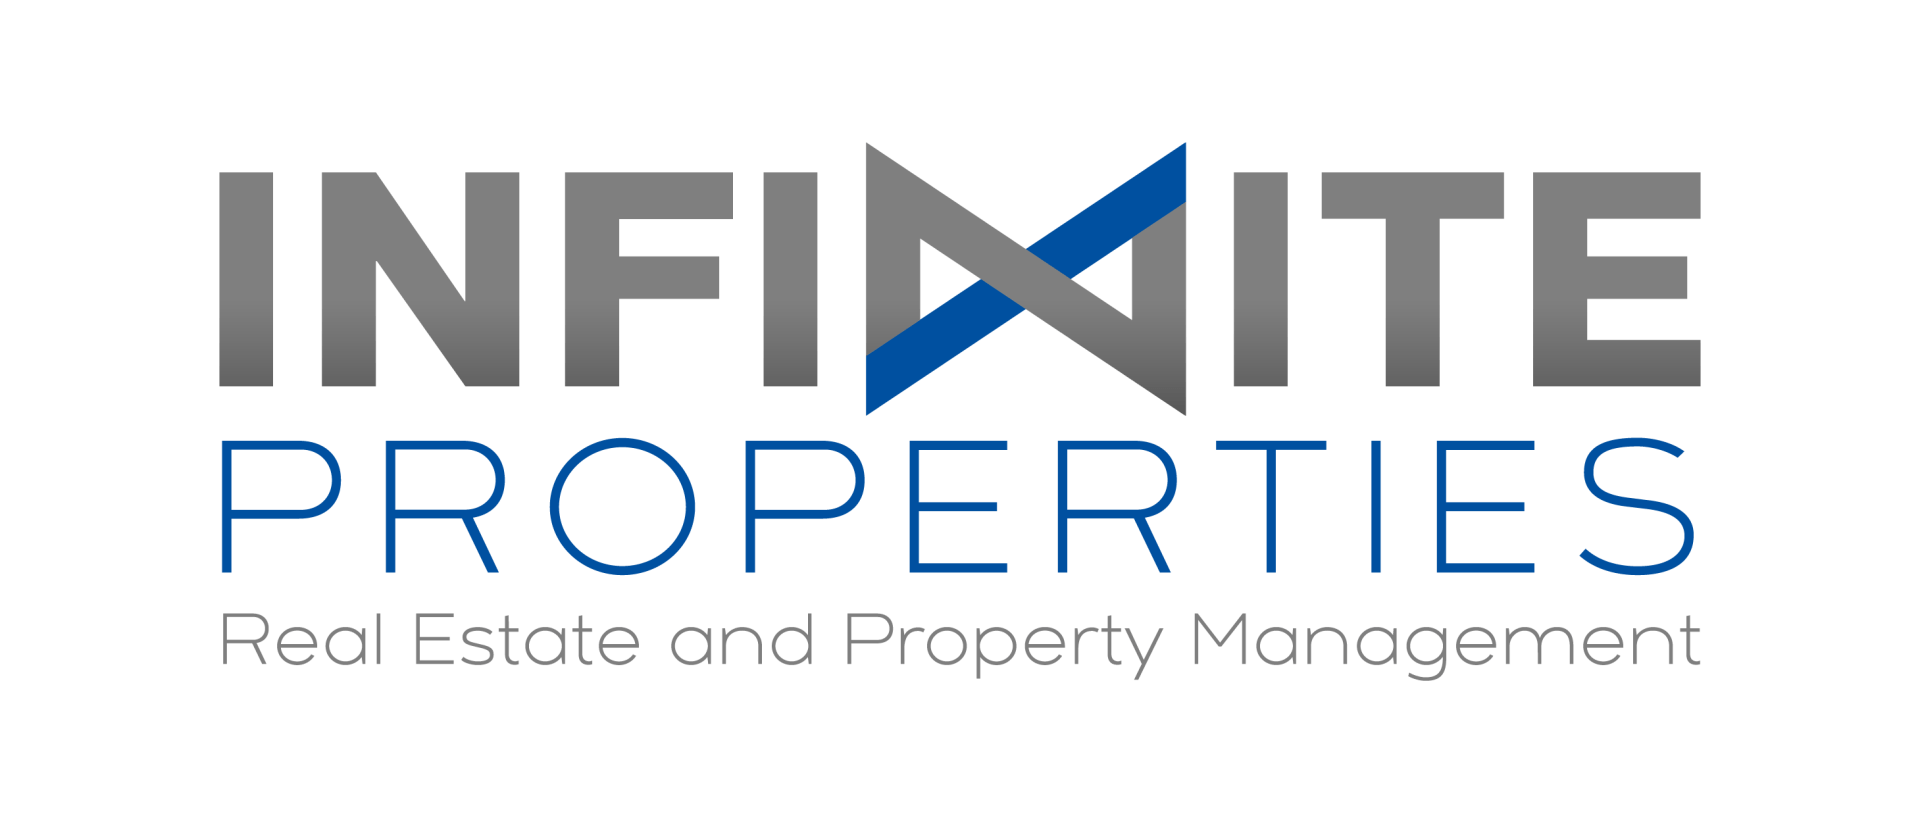 intinite properties logo